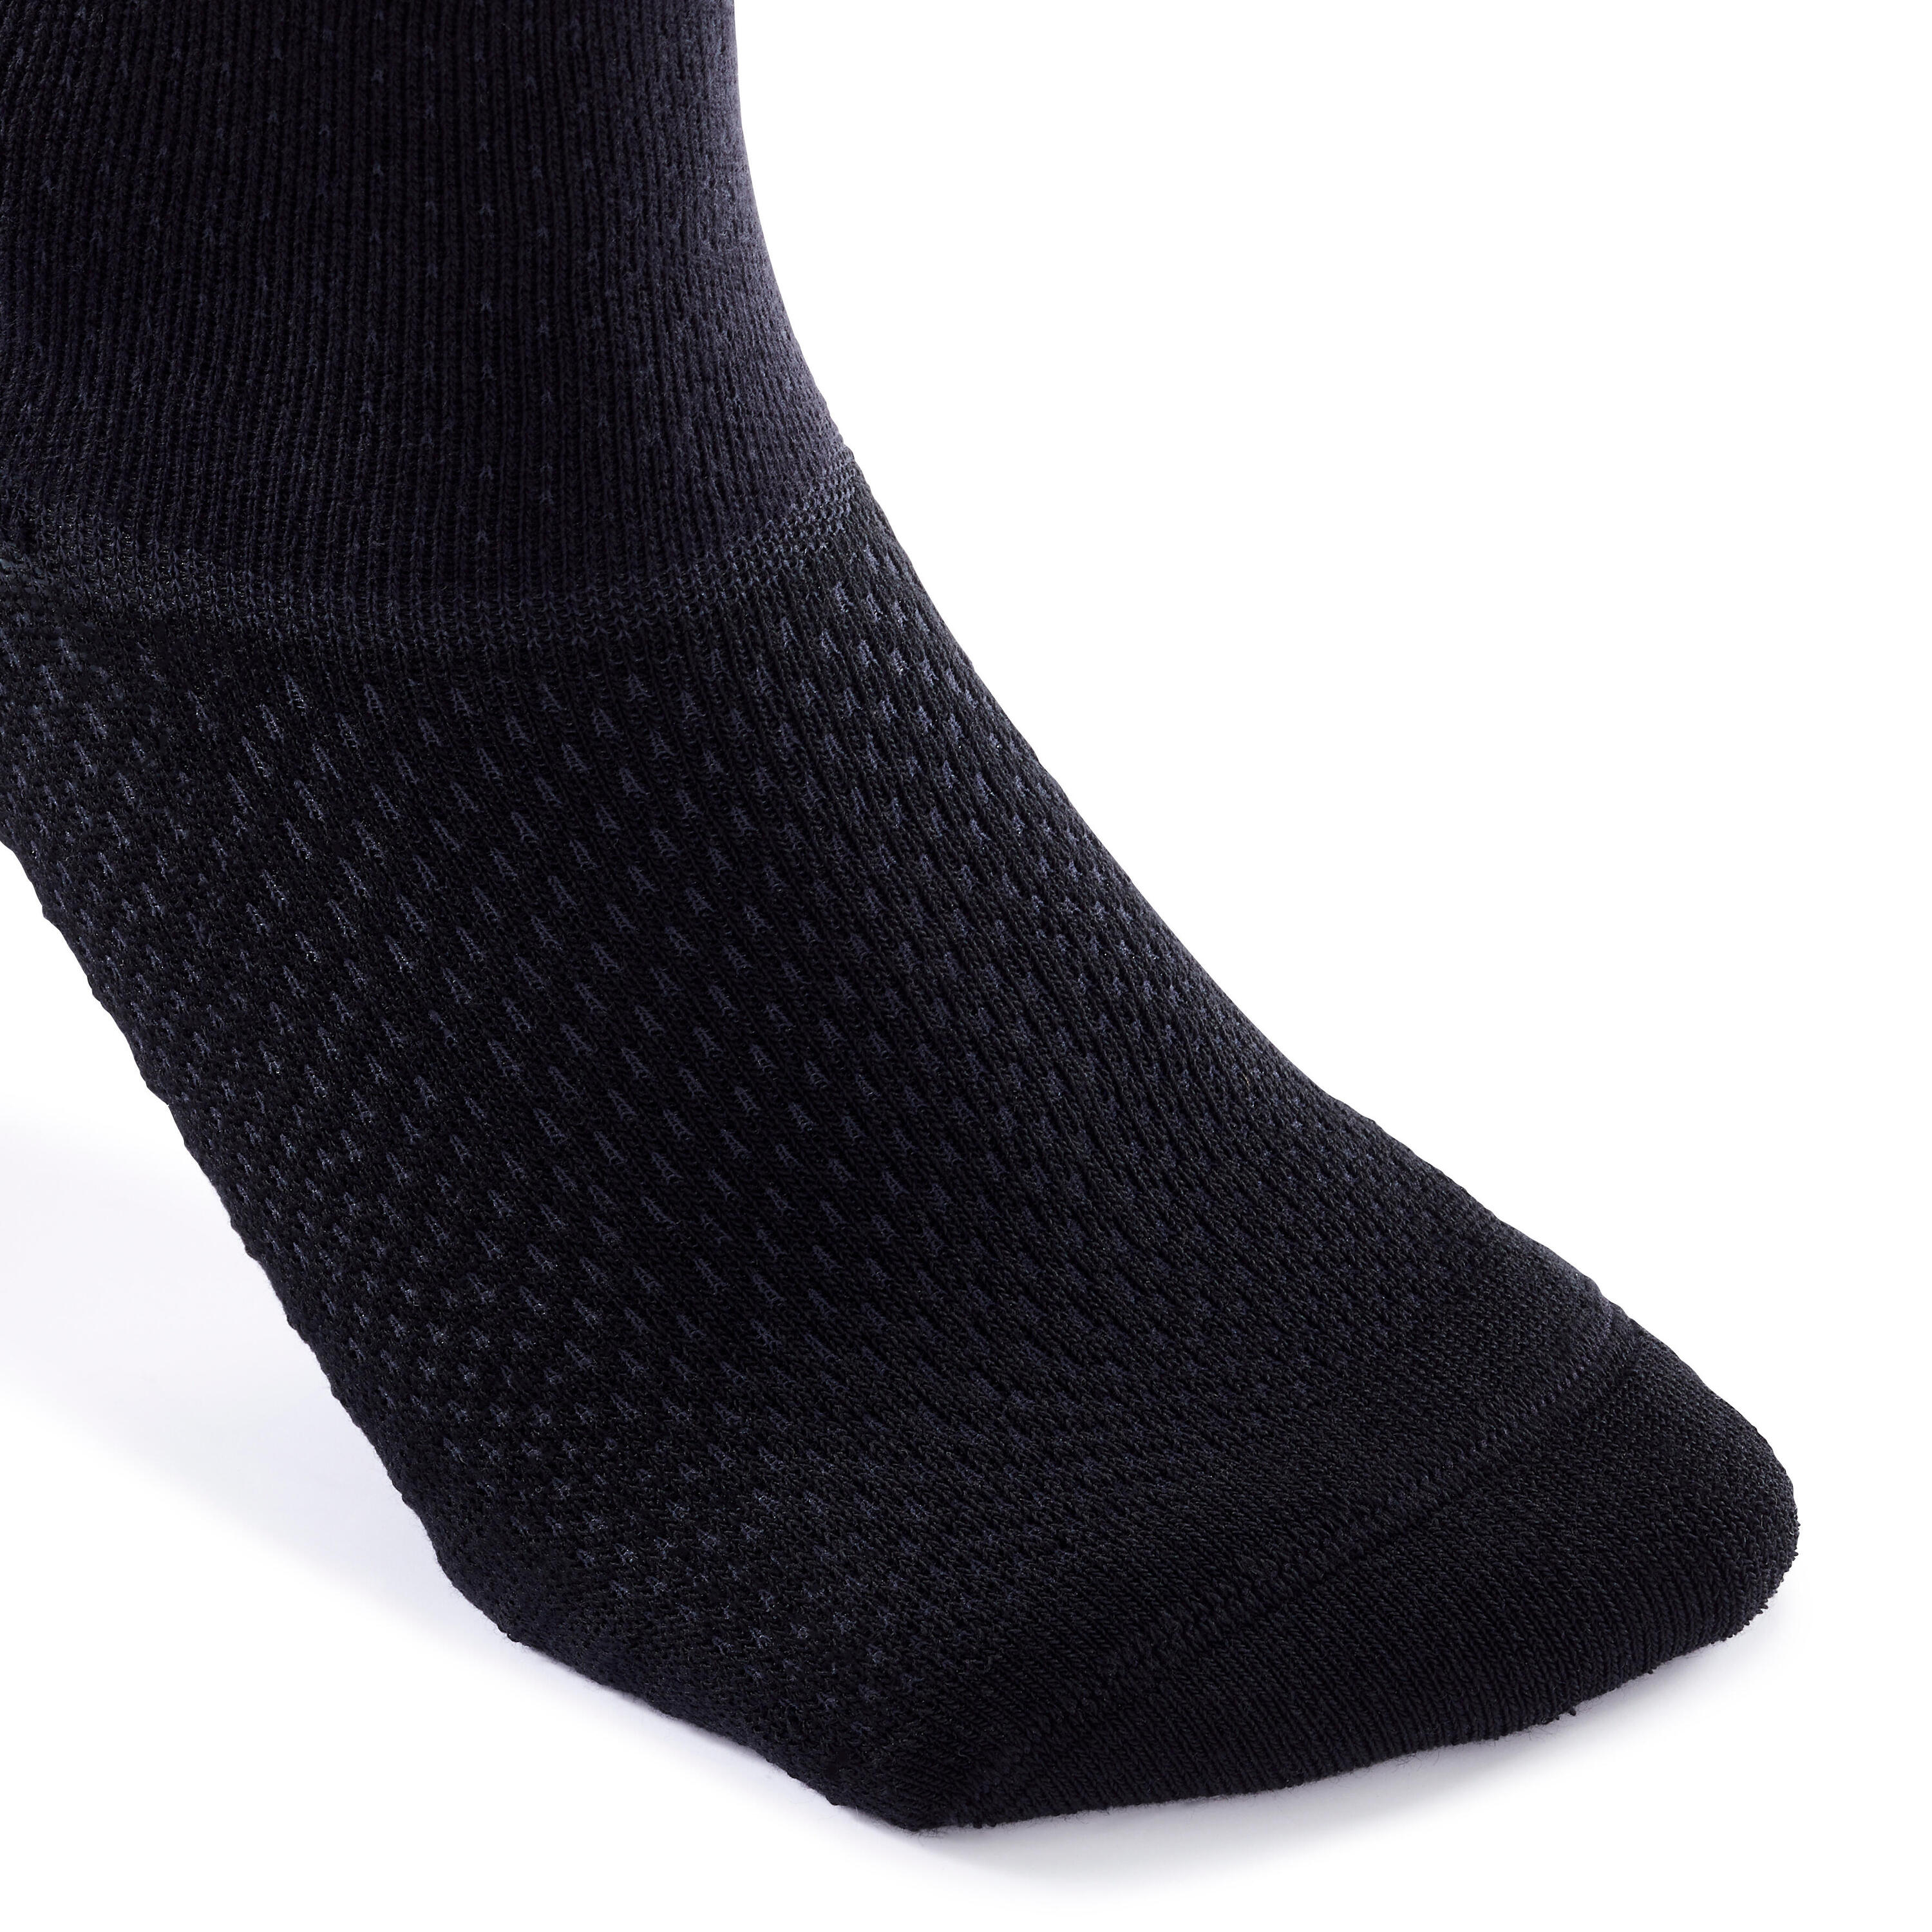 High socks - 2-Pair pack - Black 3/3